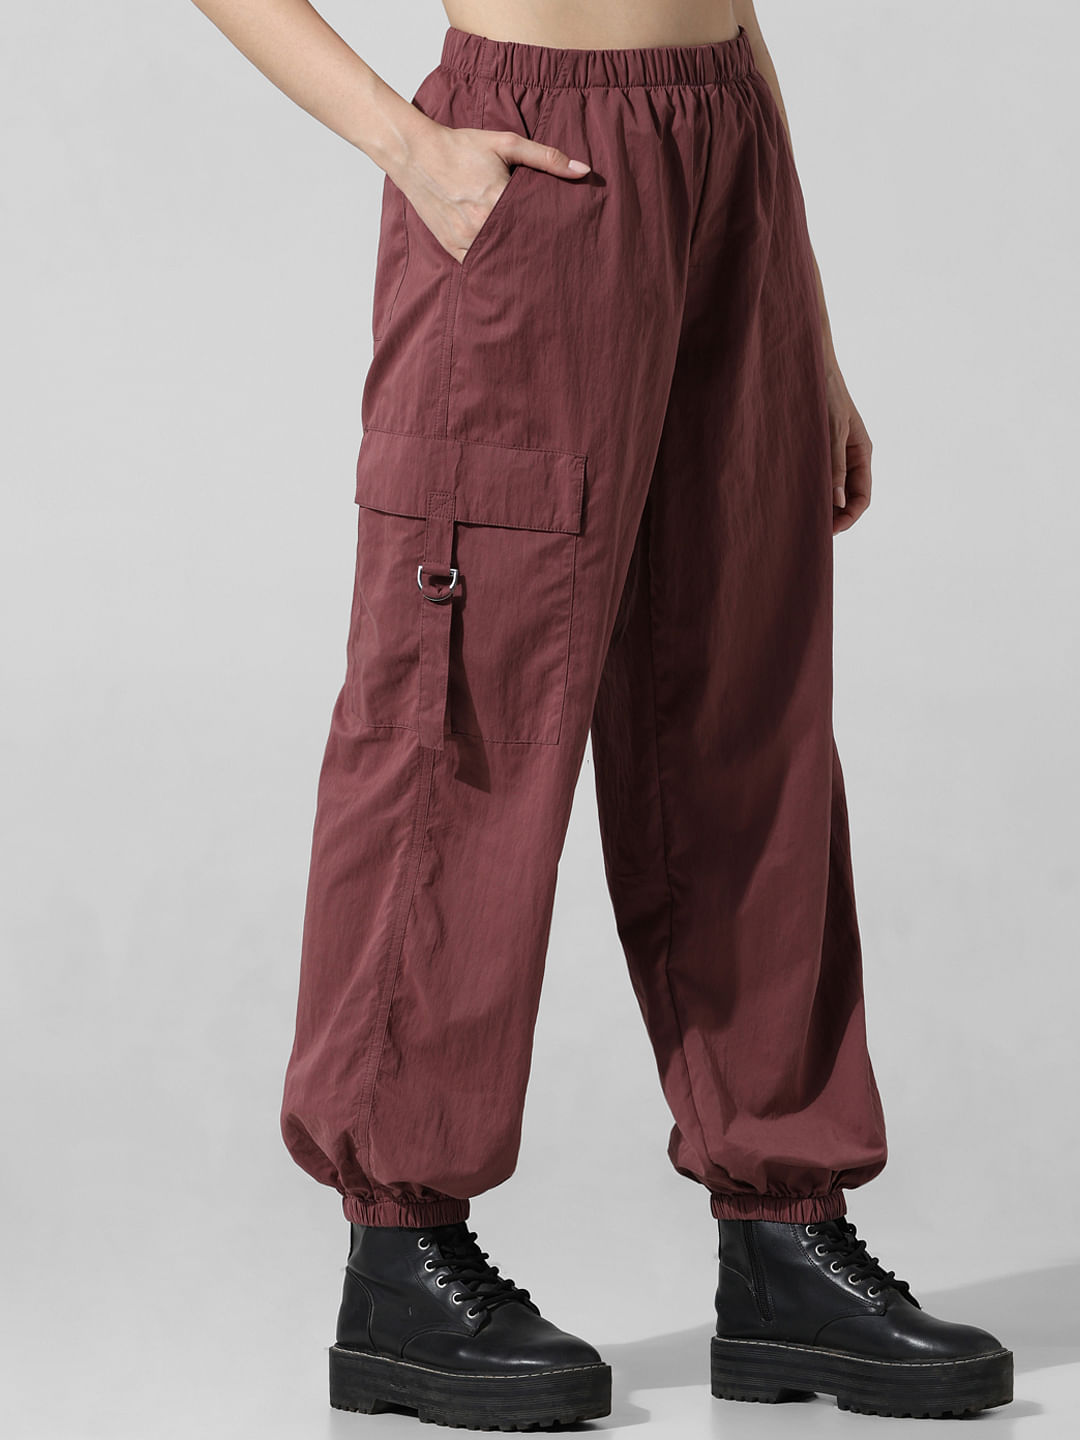 Parachute cargo trousers - Black - Men | H&M IN